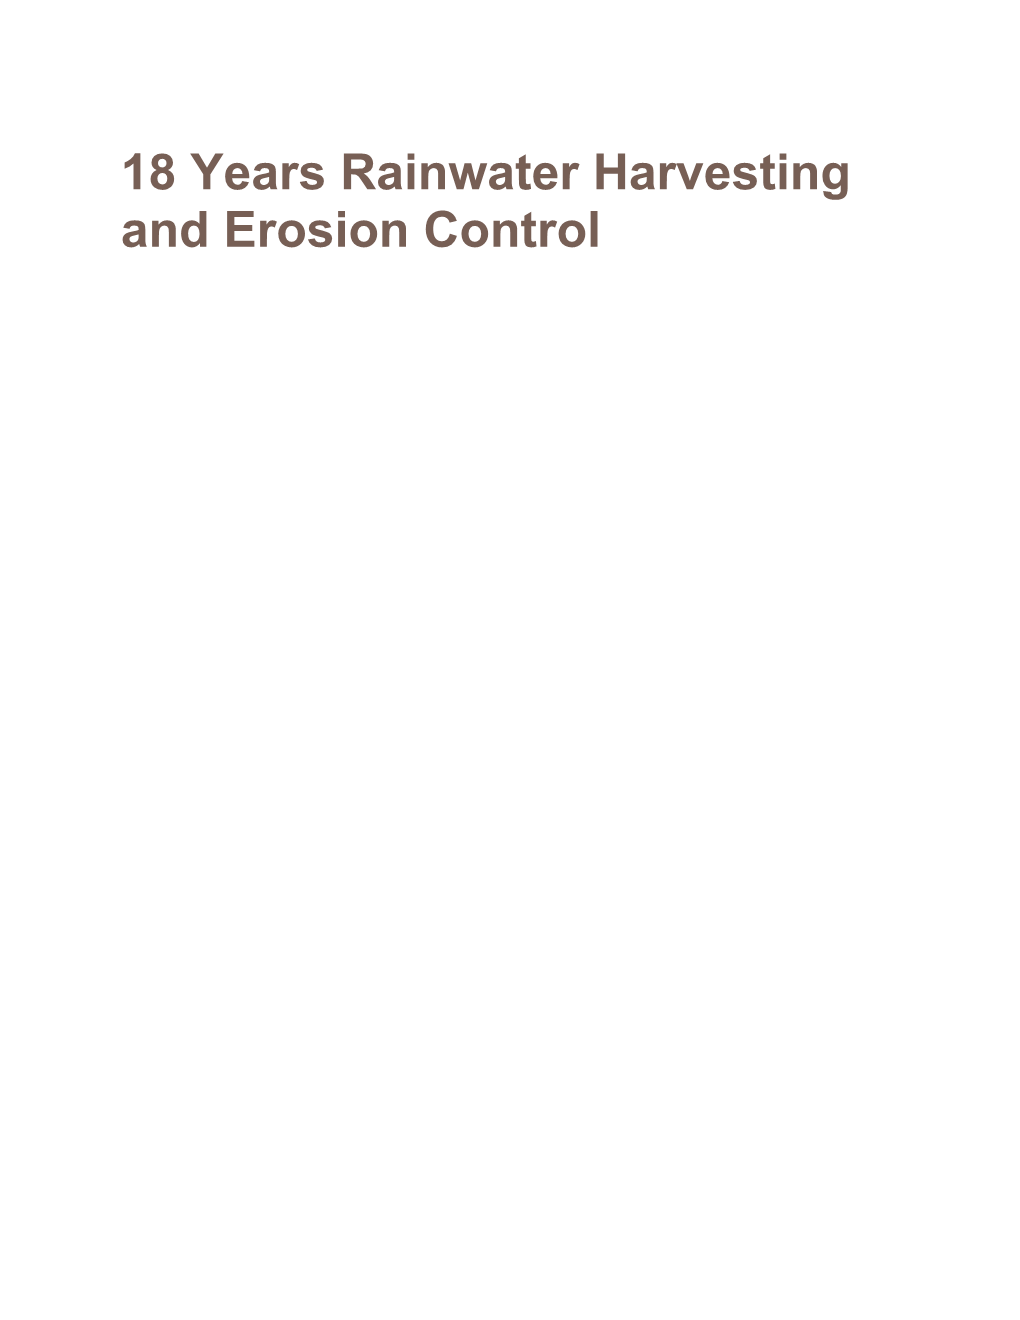 18 Years Rainwater Harvesting and Erosion Control